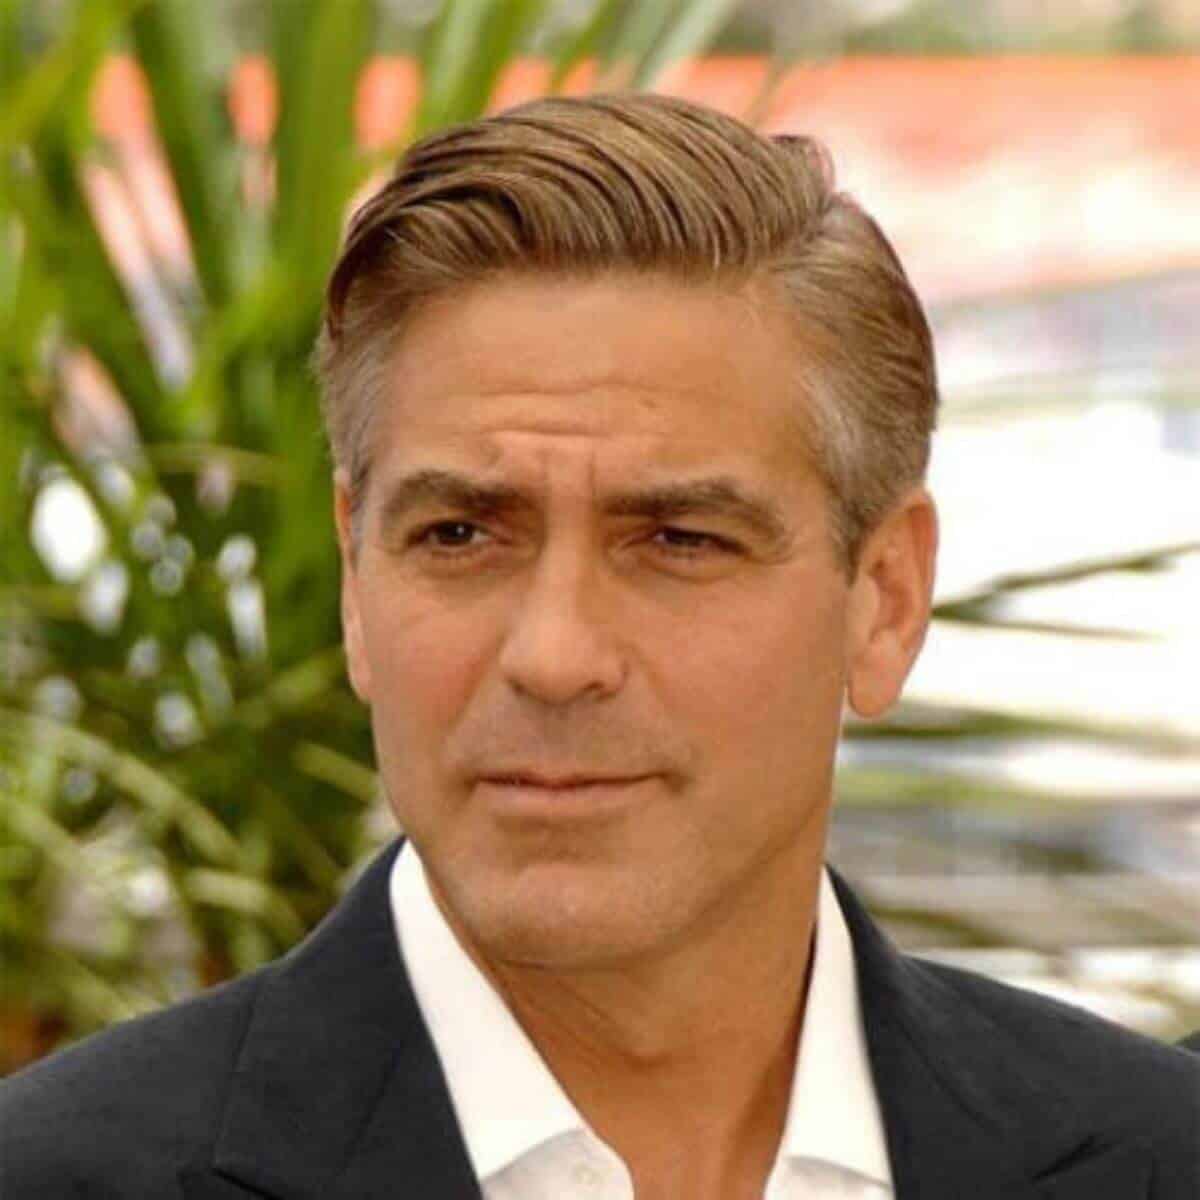 Headshot of George Clooney.